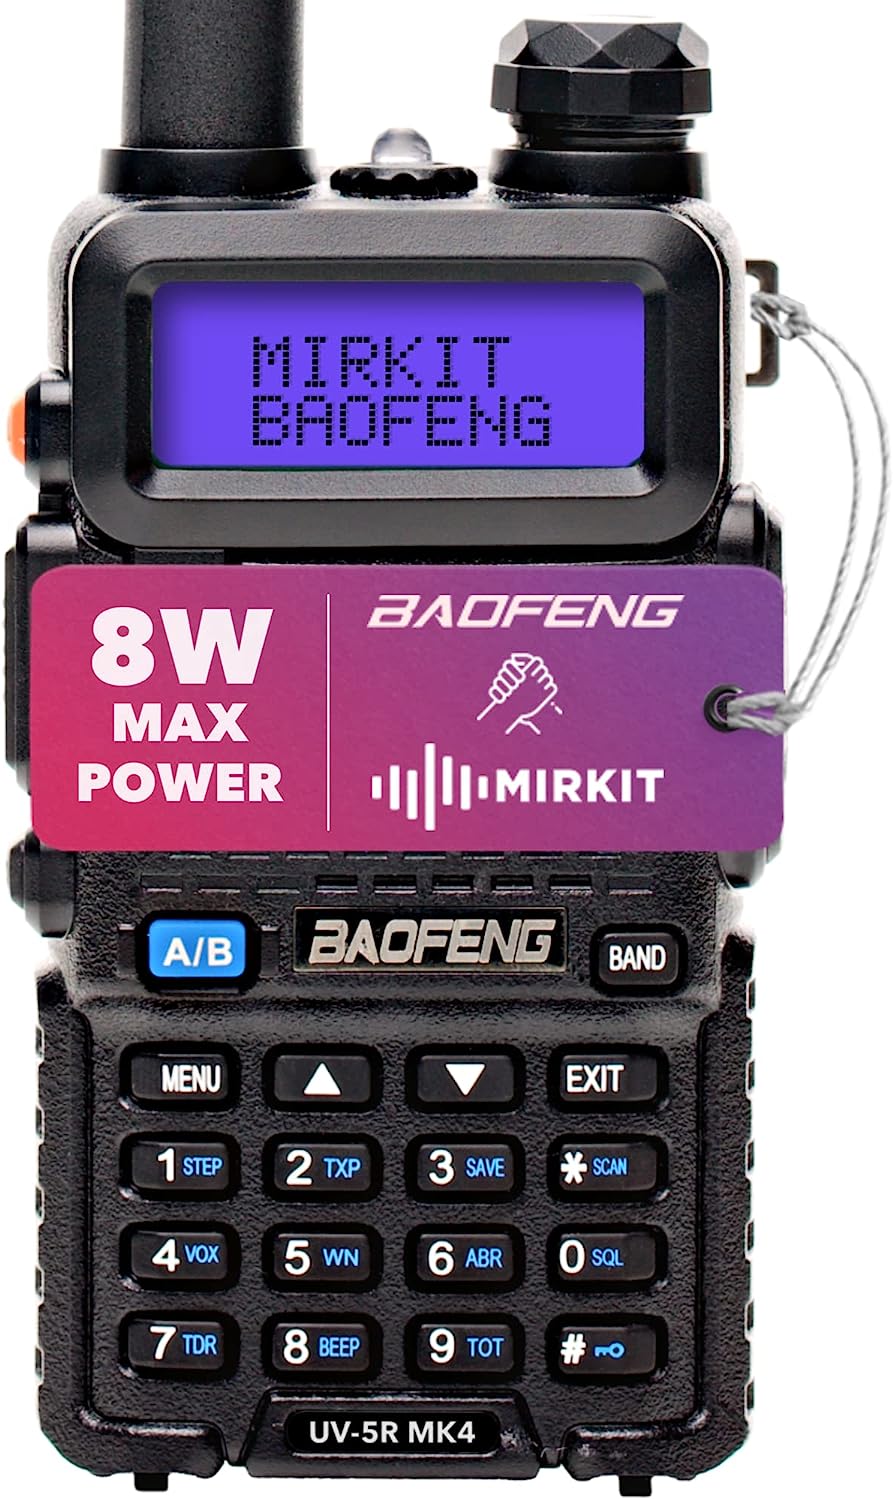 Mirkit Ham Radio Baofeng UV-5R MK4 8 Watt Max Power [...]